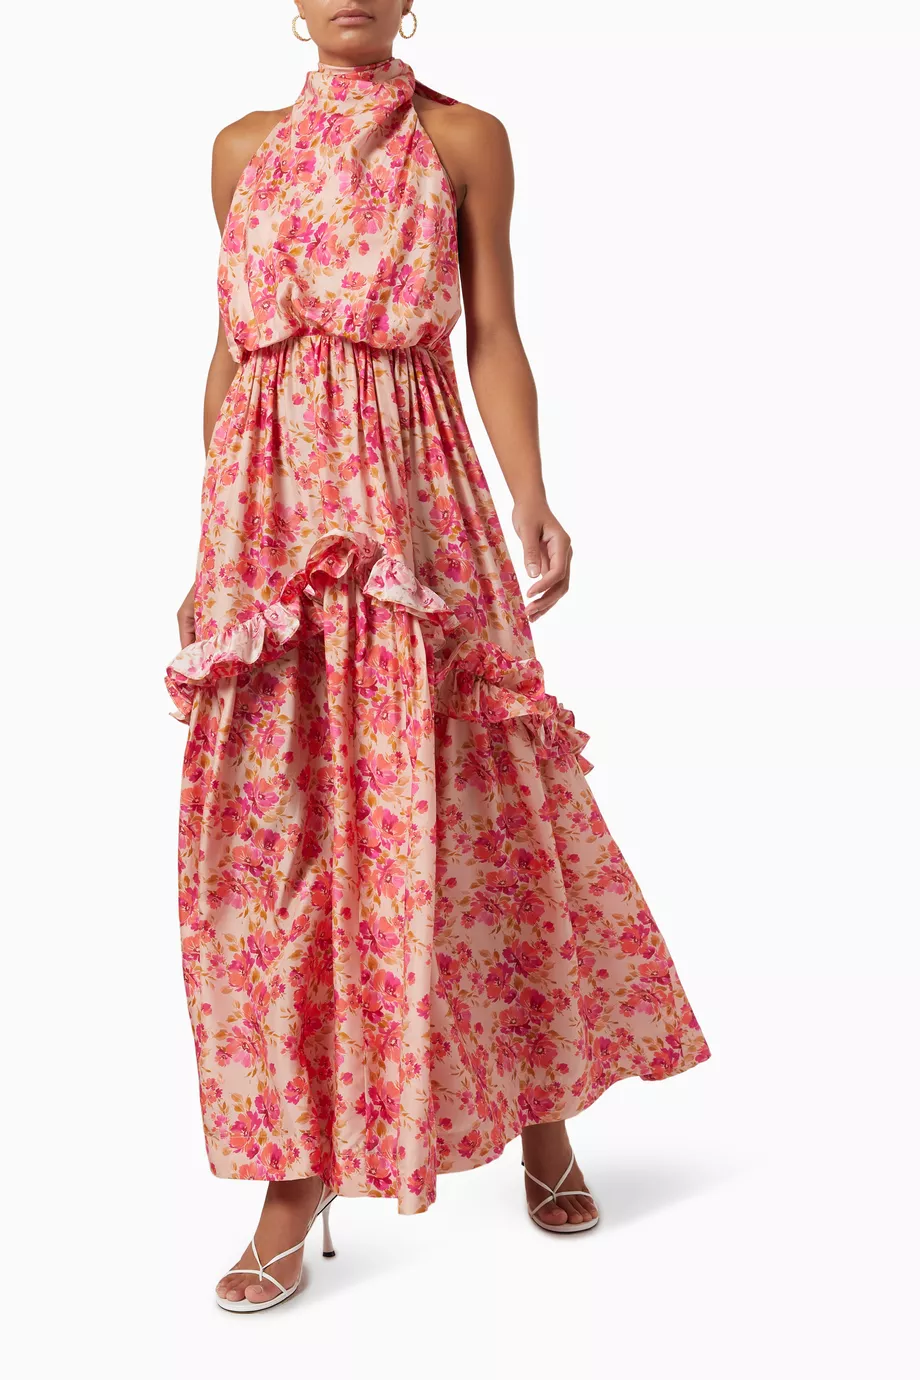 Shop Carolina Herrera Floral Ruffle-Embellished Gown Saks, 60% OFF